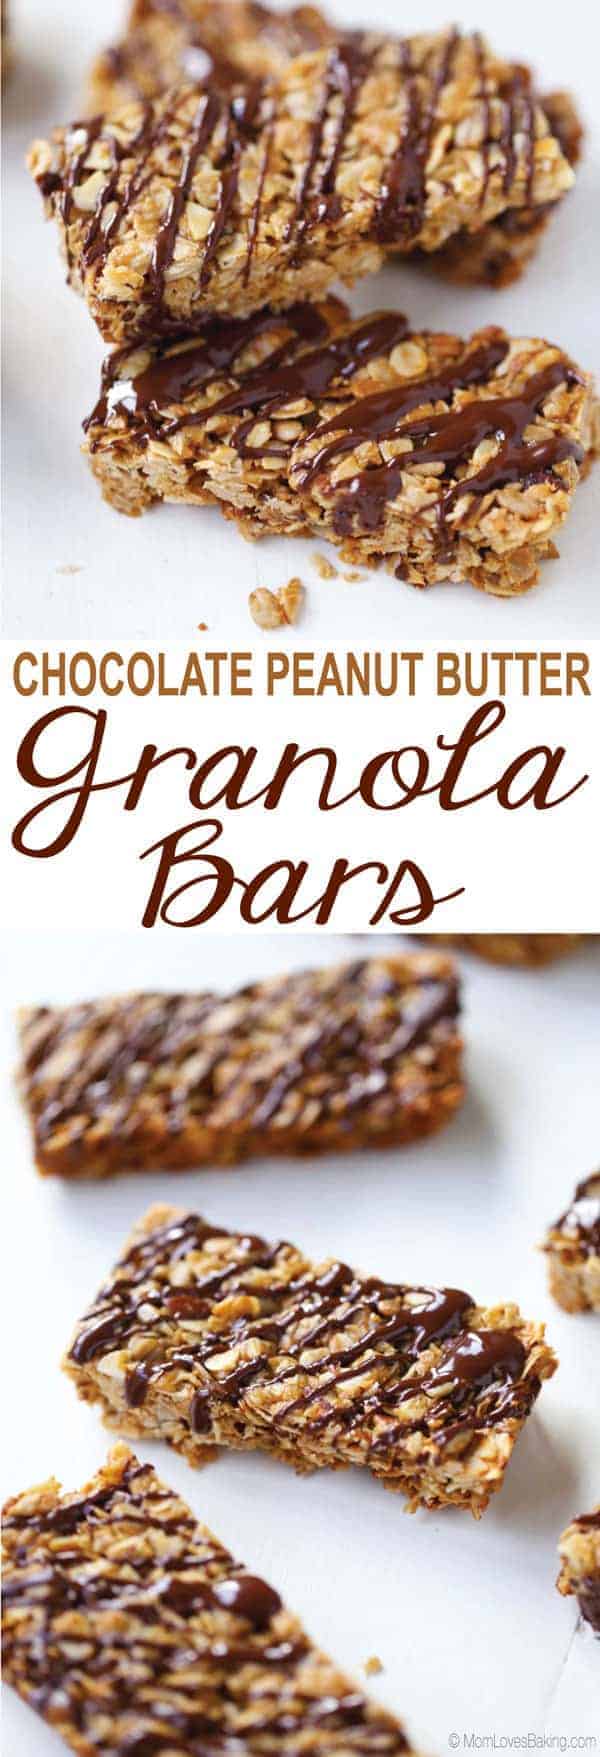 Chocolate Peanut Butter Granola Bars